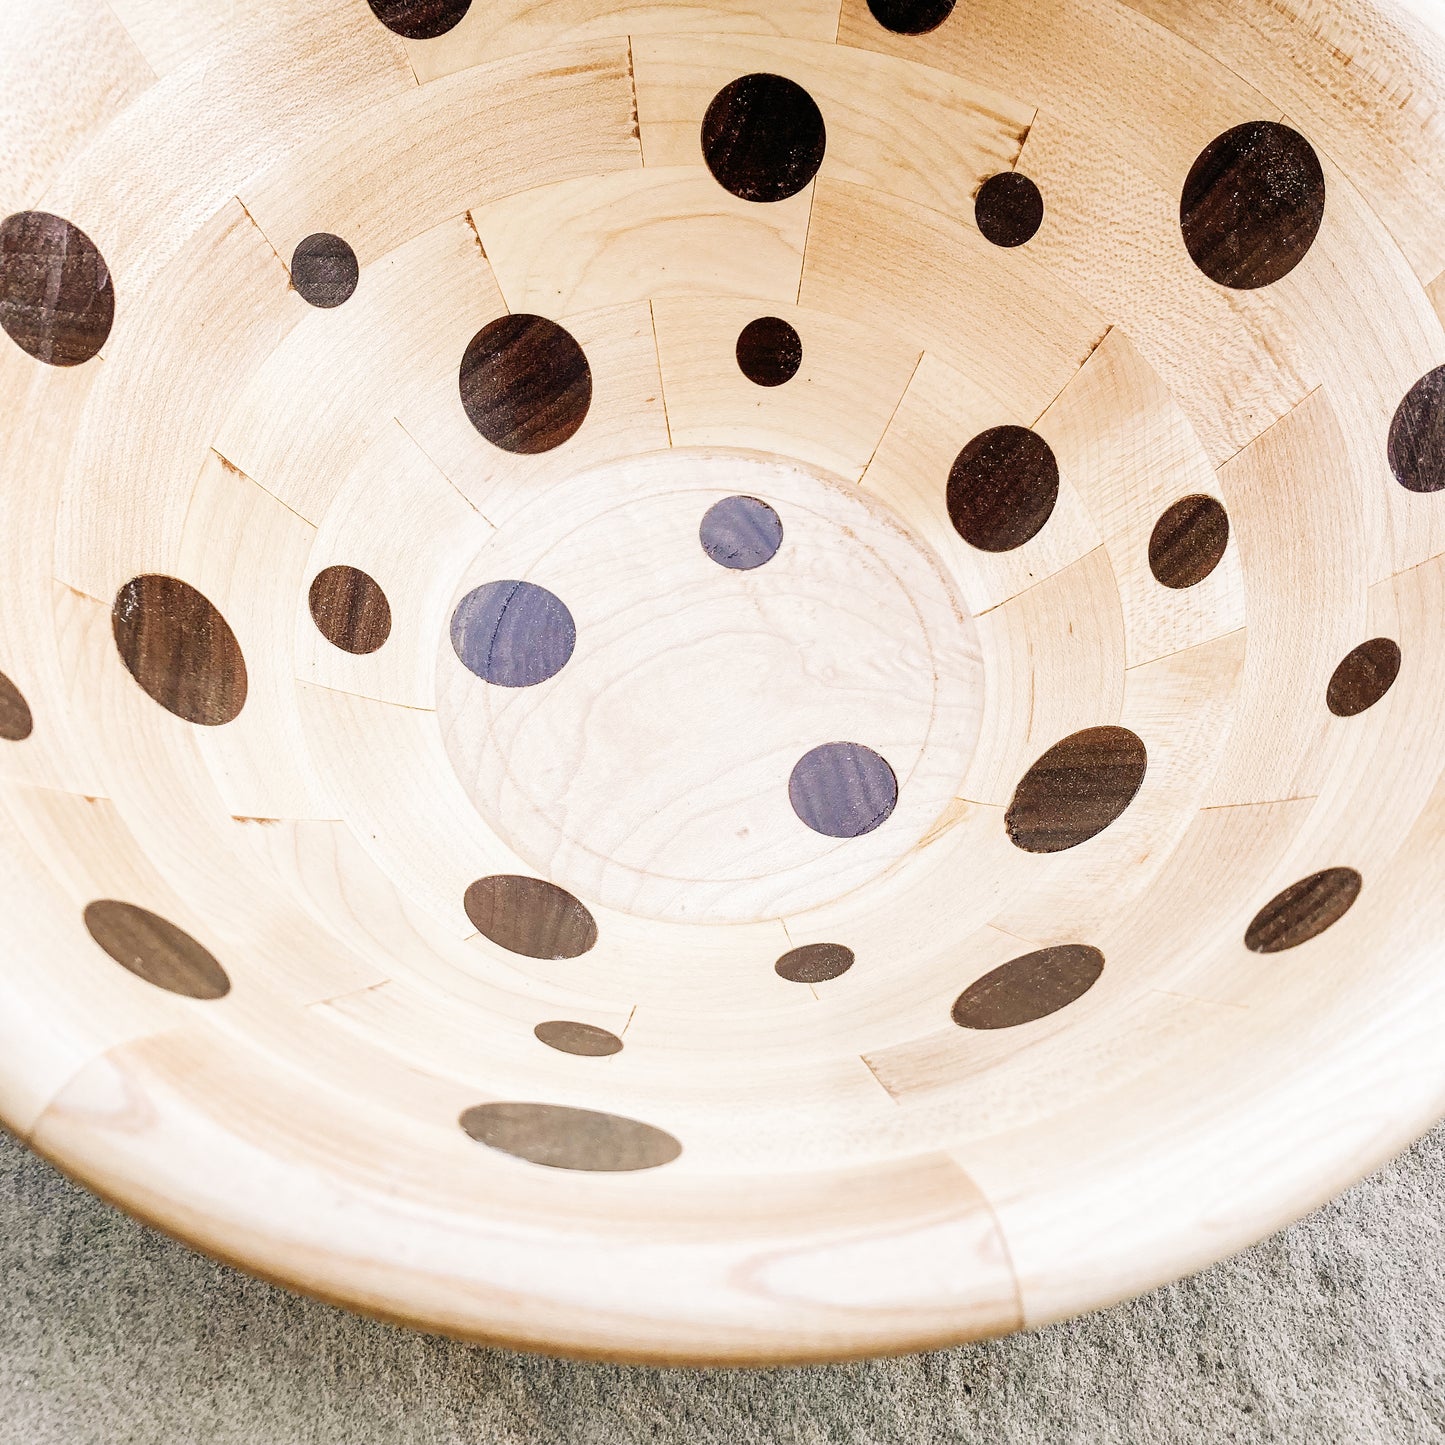 Wooden Bowl - Dots